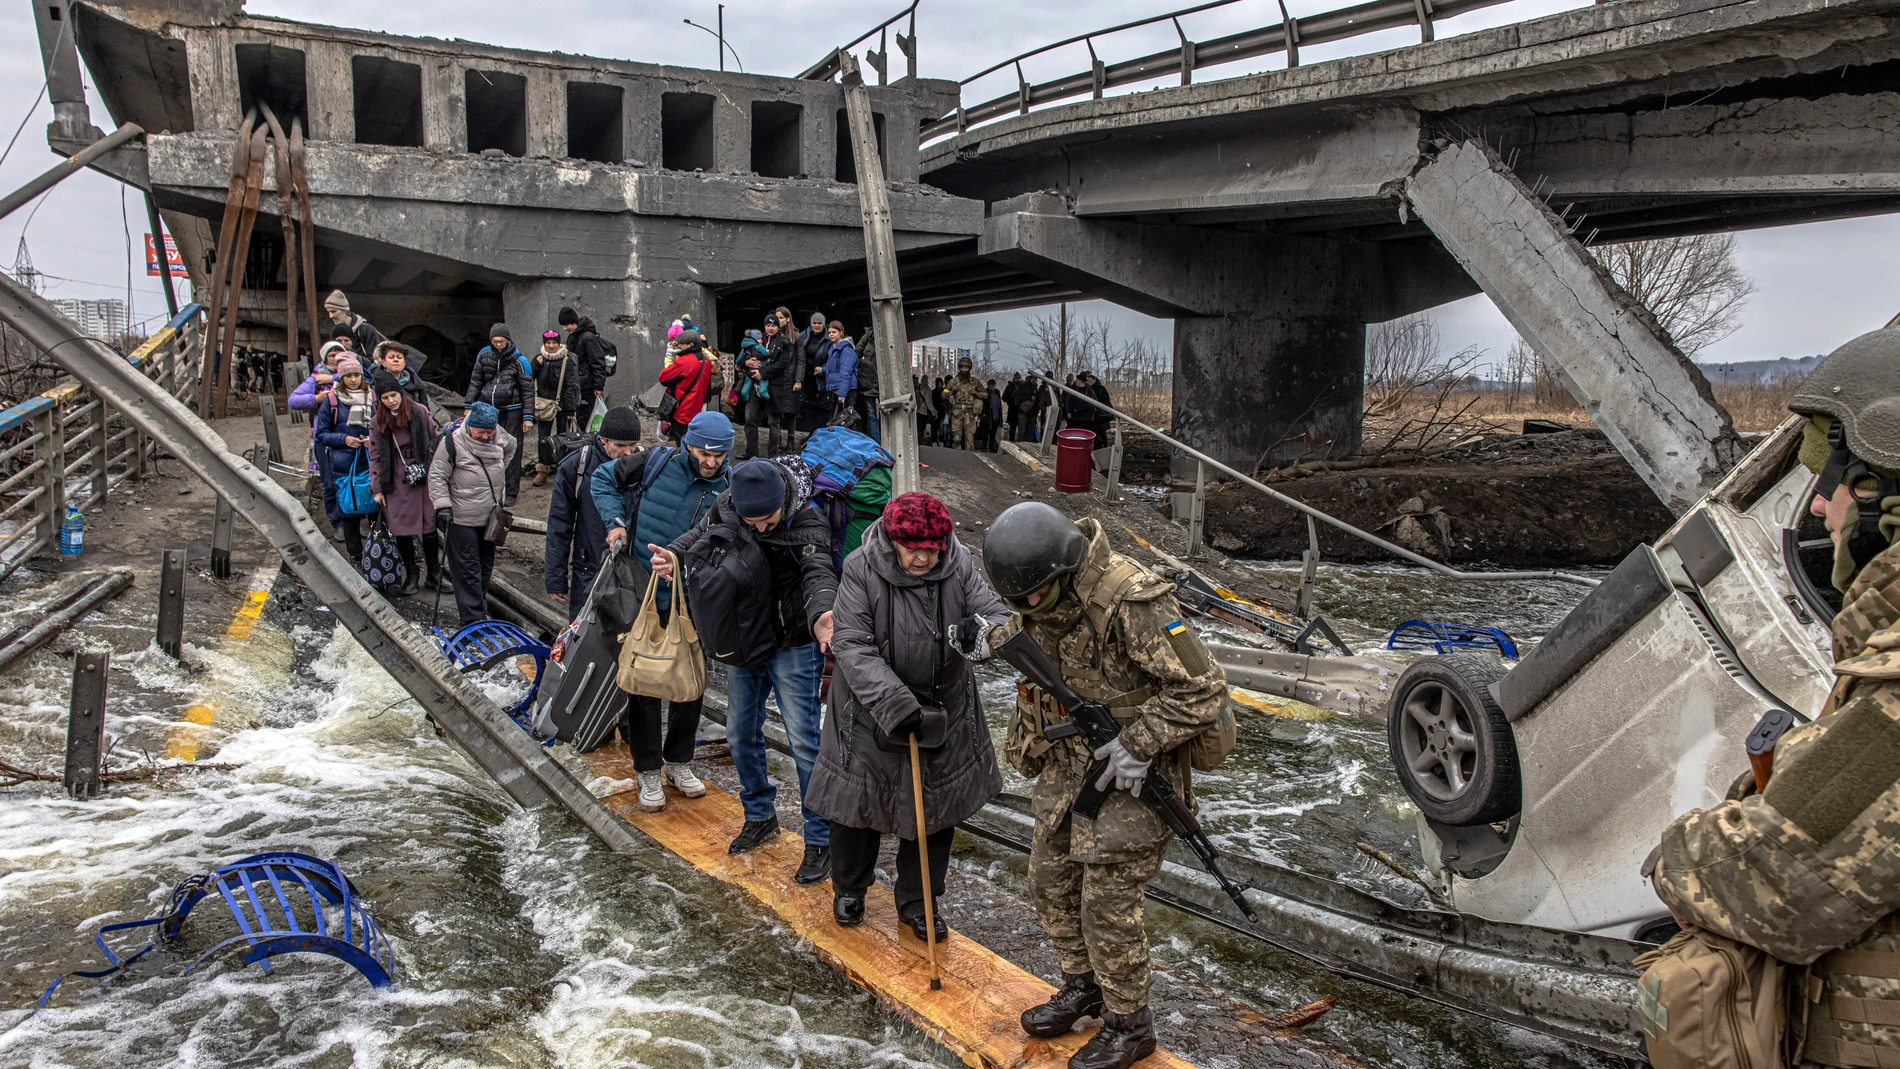 Cruzan un puente destruido en Irpin, Ucrania